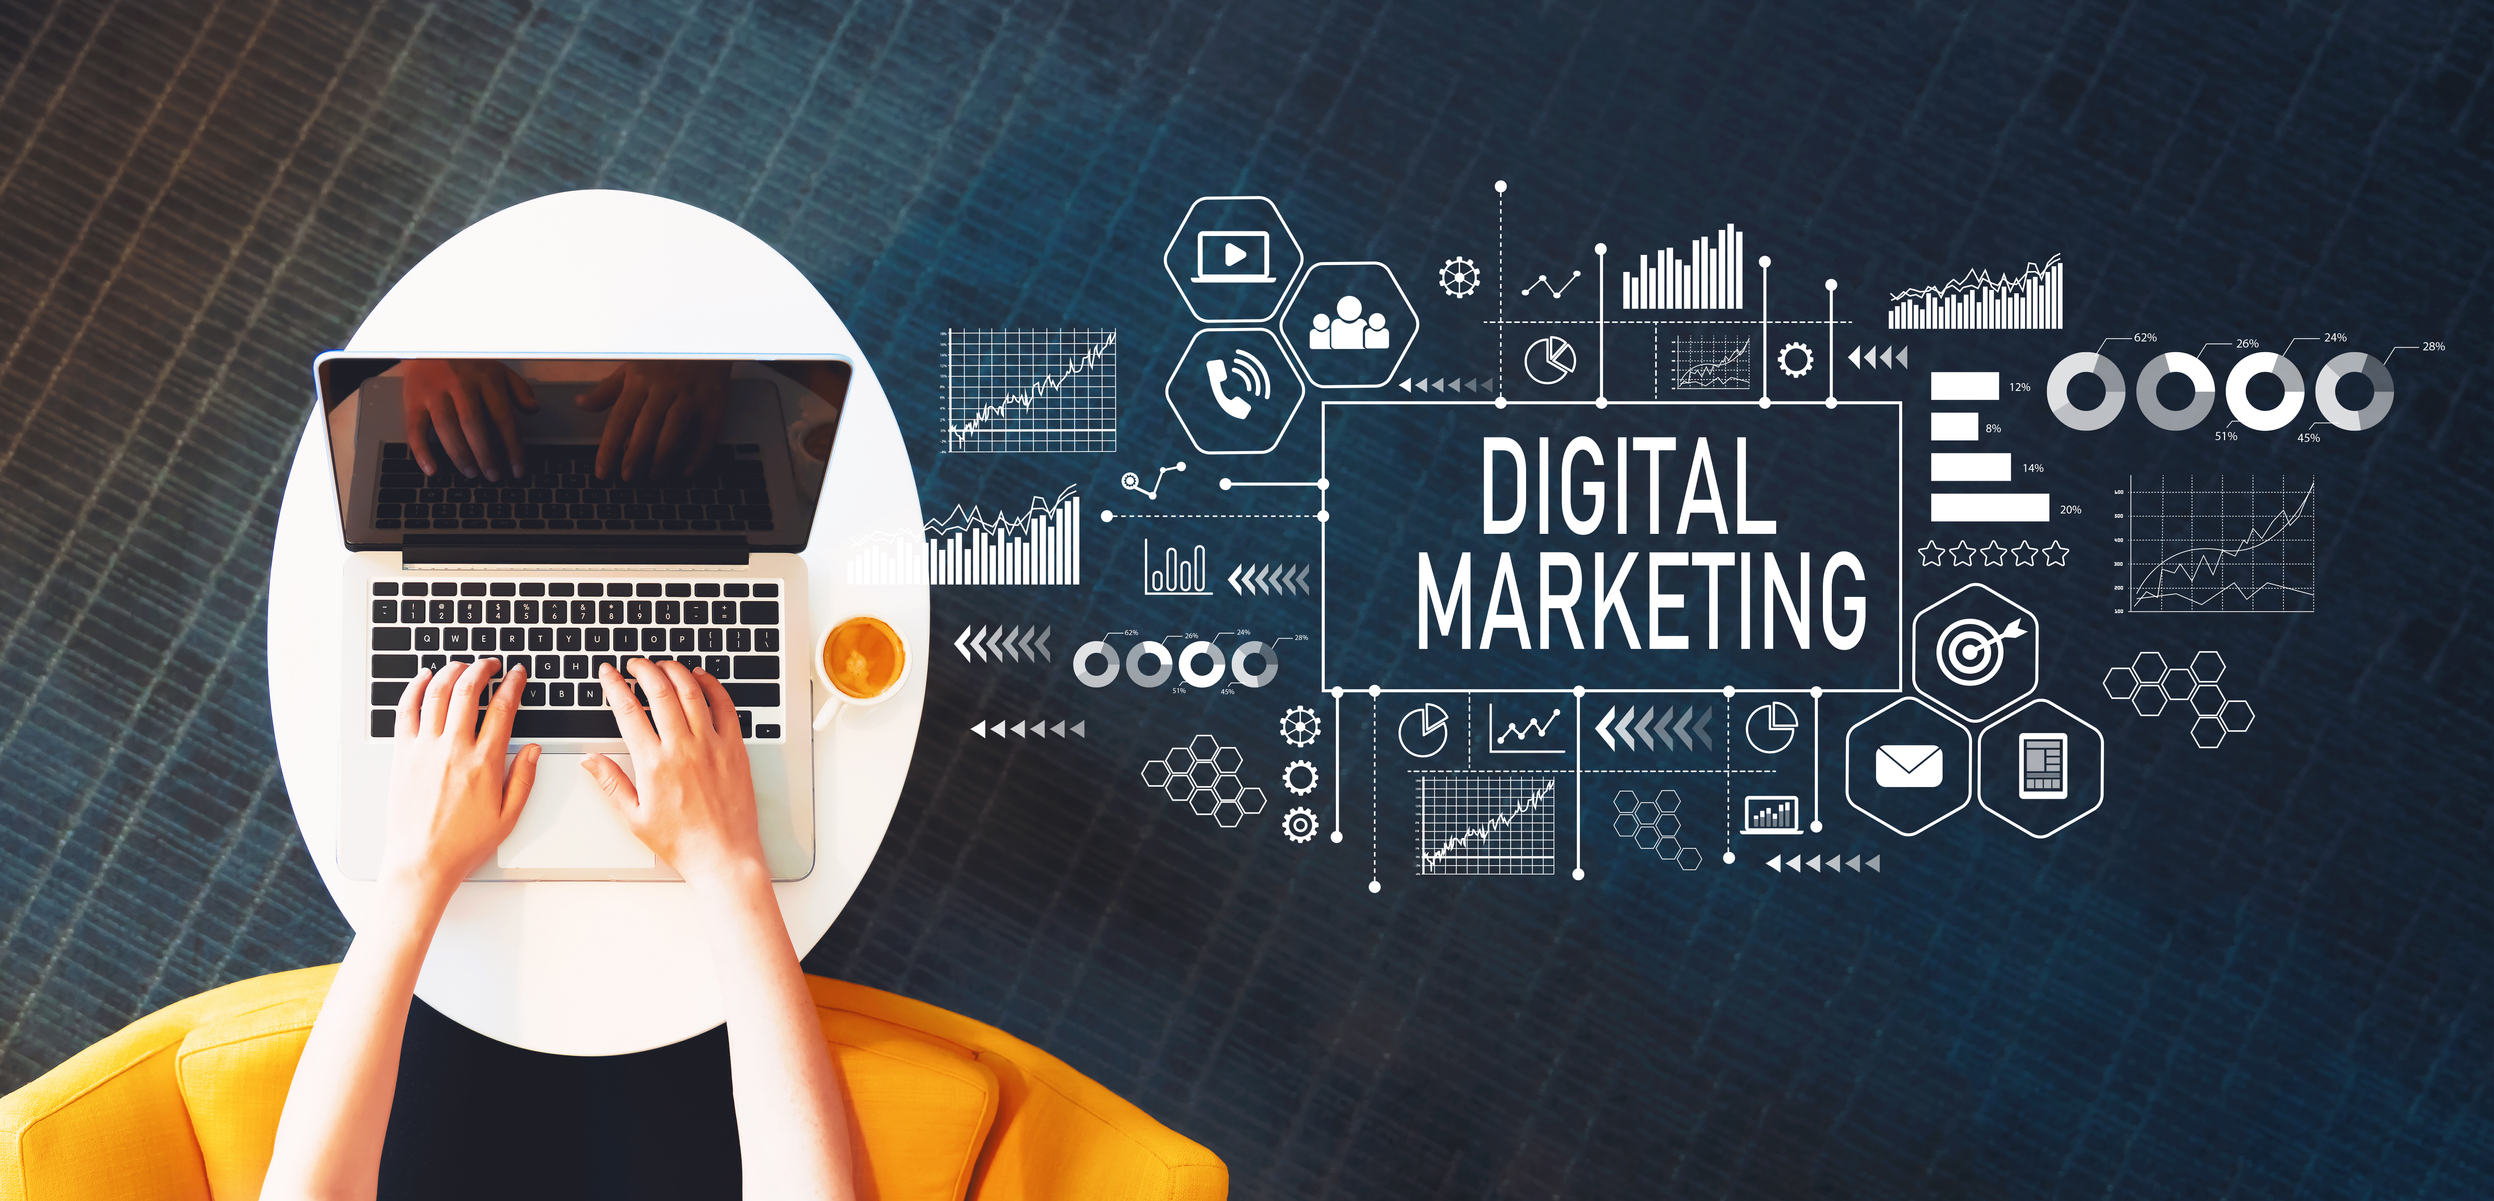 Digital Marketing: Stock Image